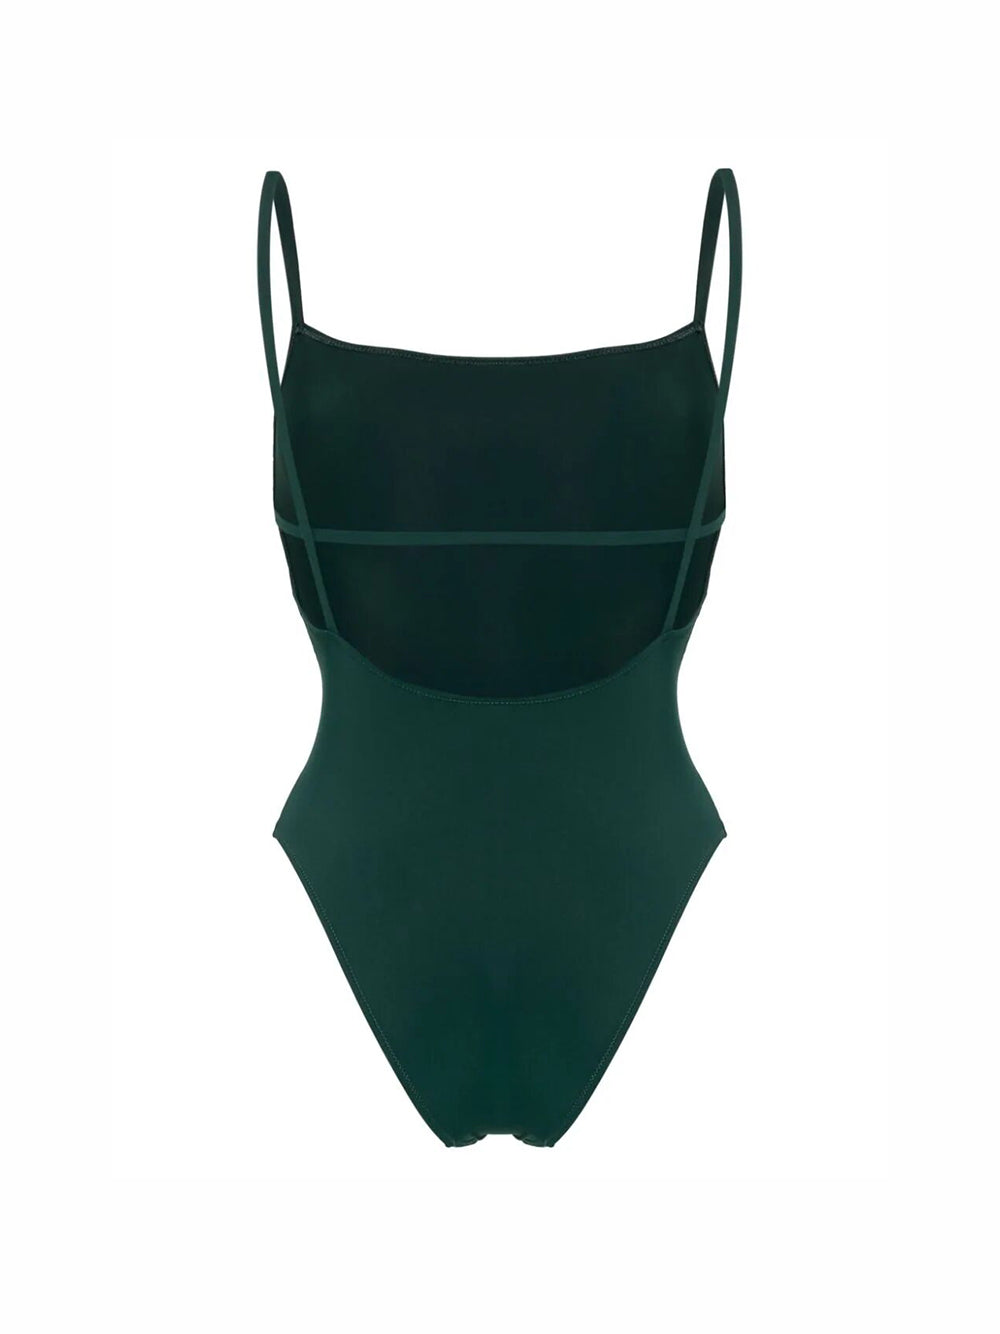 Tre one-piece geometrical strap swimsuit